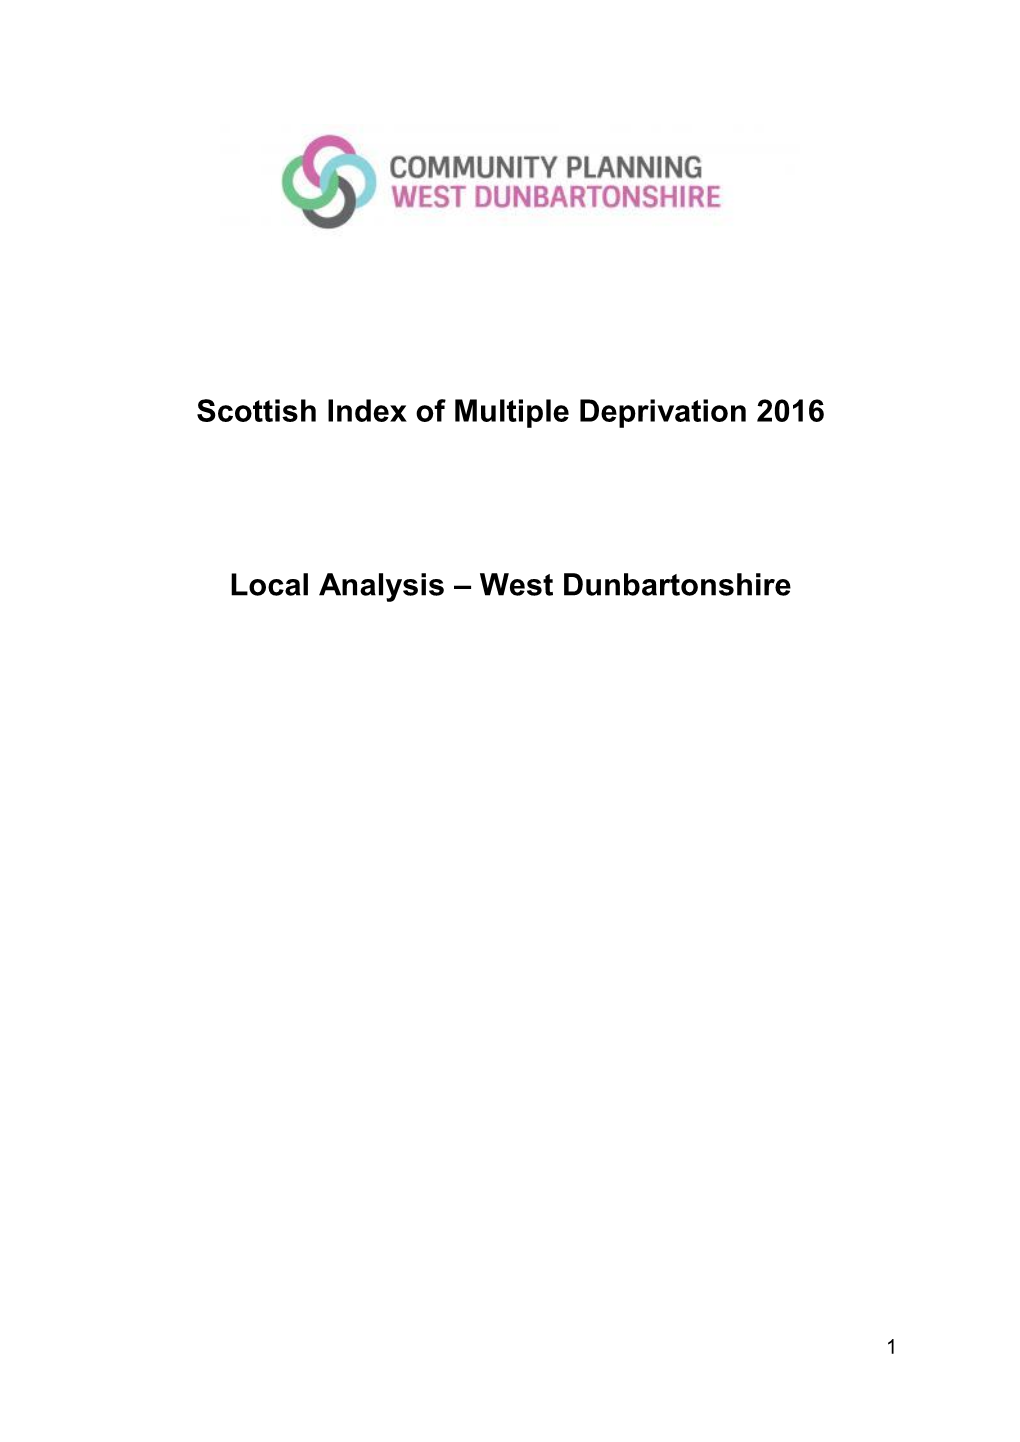 Scottish Index of Multiple Deprivation 2016 Local Analysis